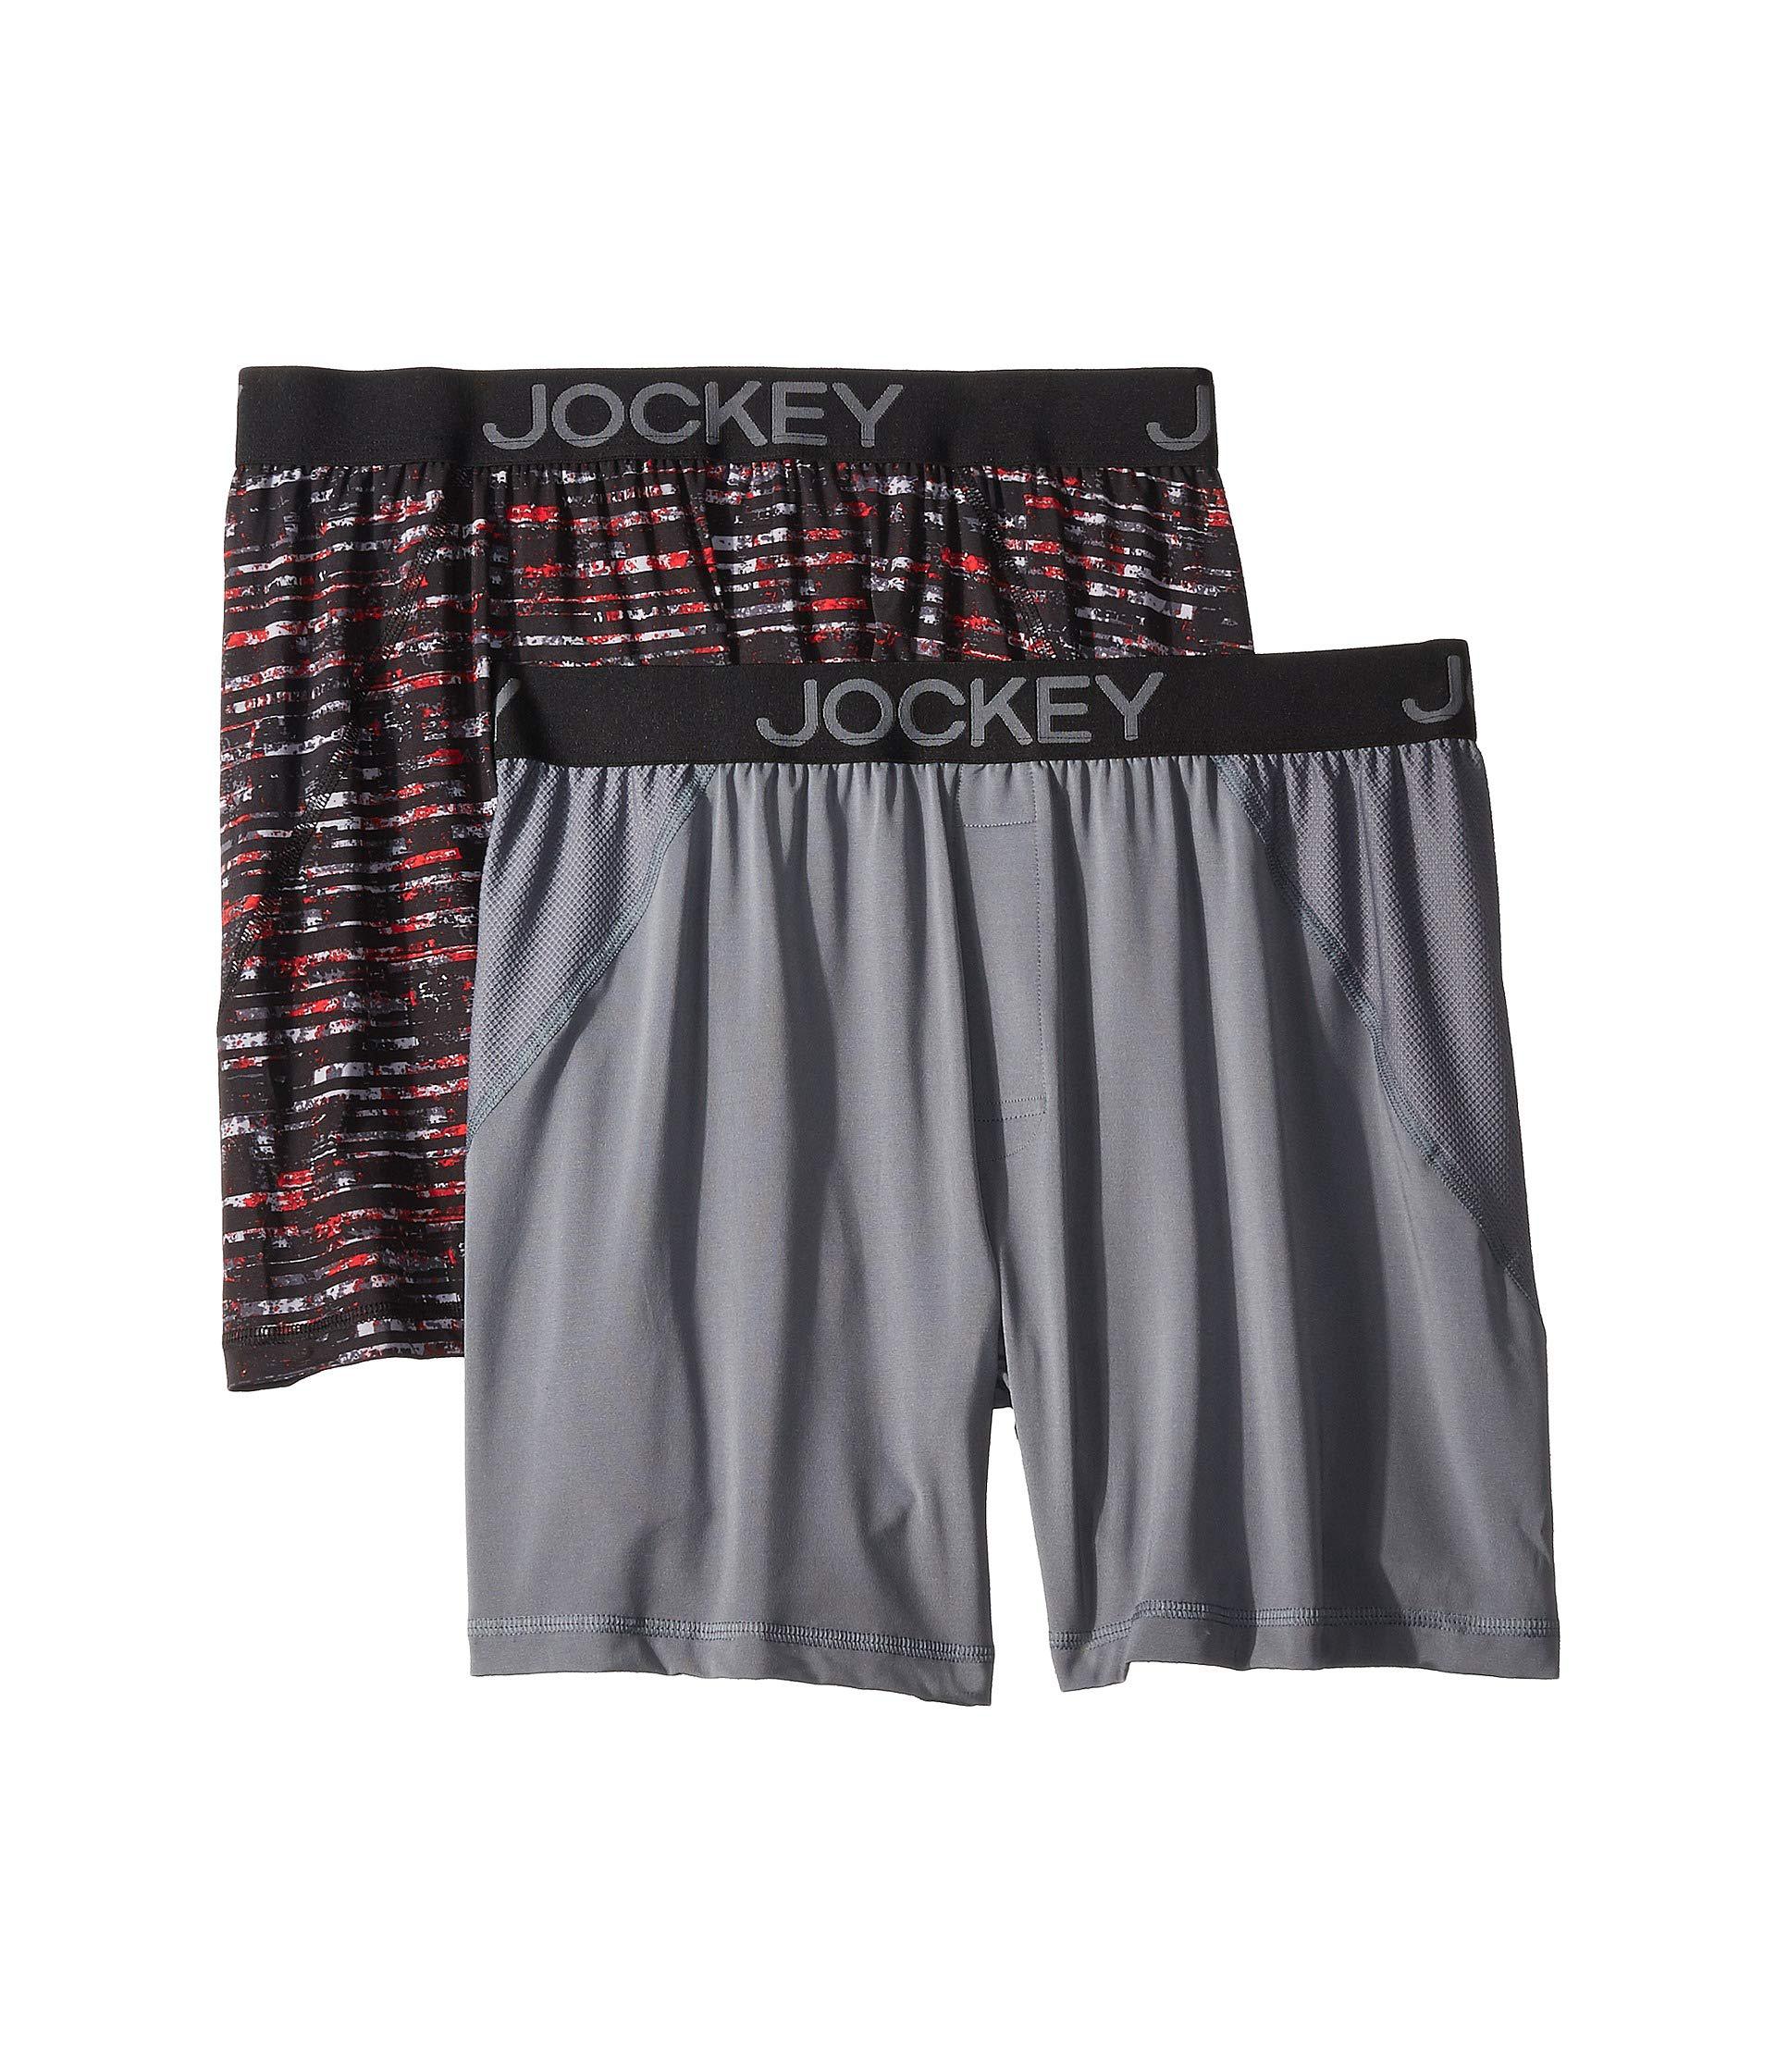 https://cdna.lystit.com/photos/zappos/8d11398d/jockey-Painterly-Stripe-GreyLantern-Gr-No-Bunch-Boxer-Synthetic-2-pack-painterly-Stripe-Greylantern-Grey-Mens-Underwear.jpeg